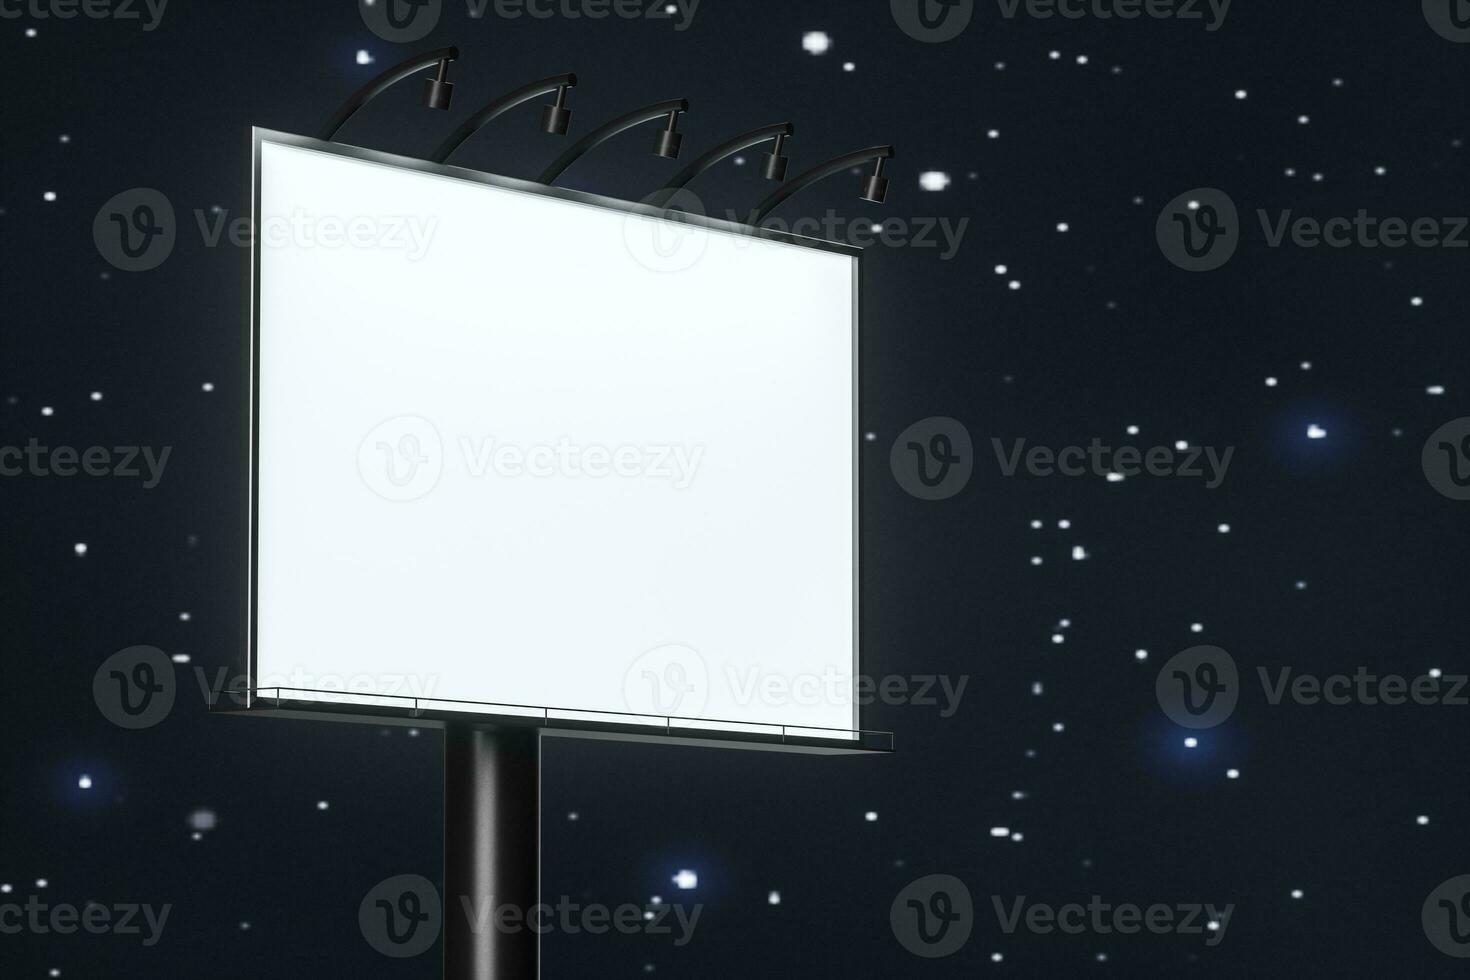 3d weergave, blanco reclame bord in de nacht tafereel foto